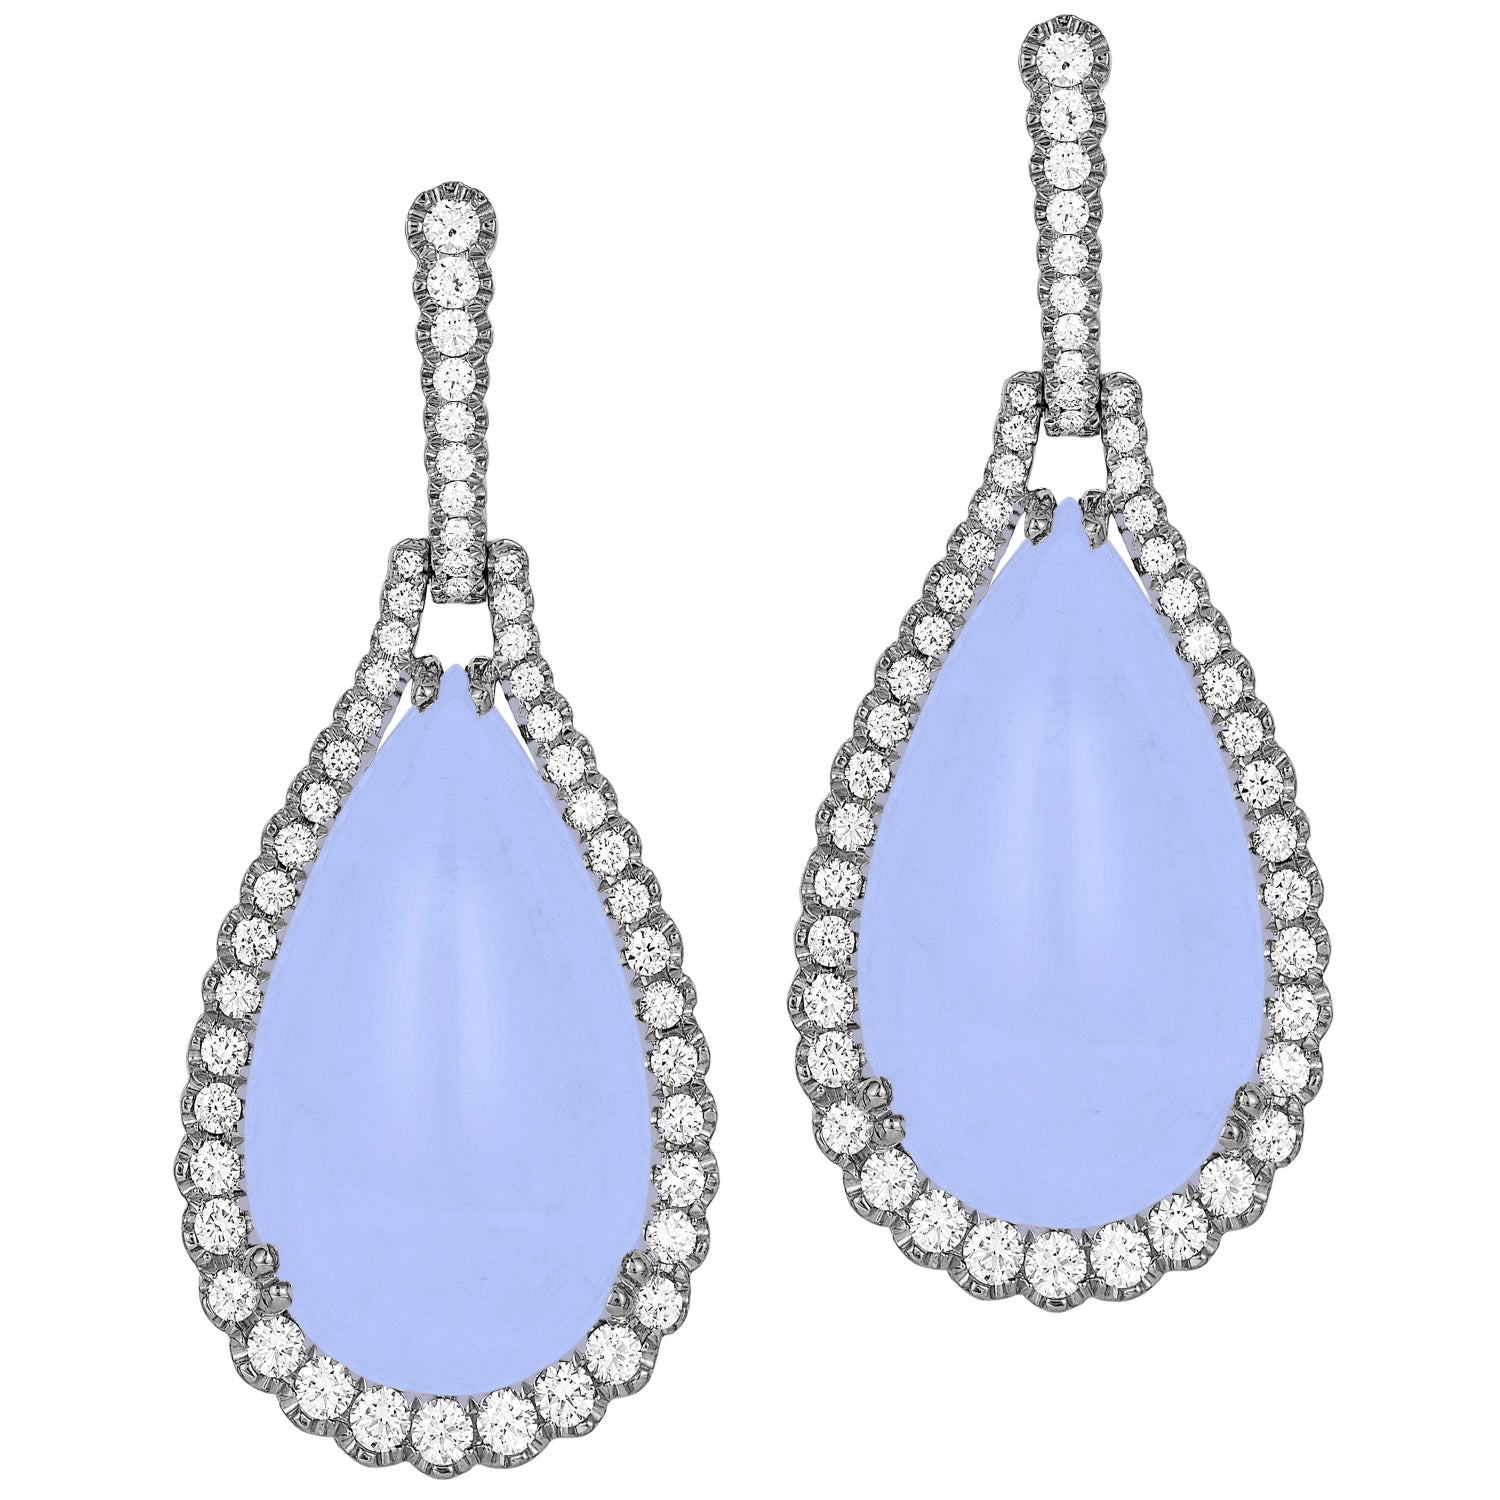 Blue Chalcedony Drops 12.11 ct — Private Jewelers Ltd.